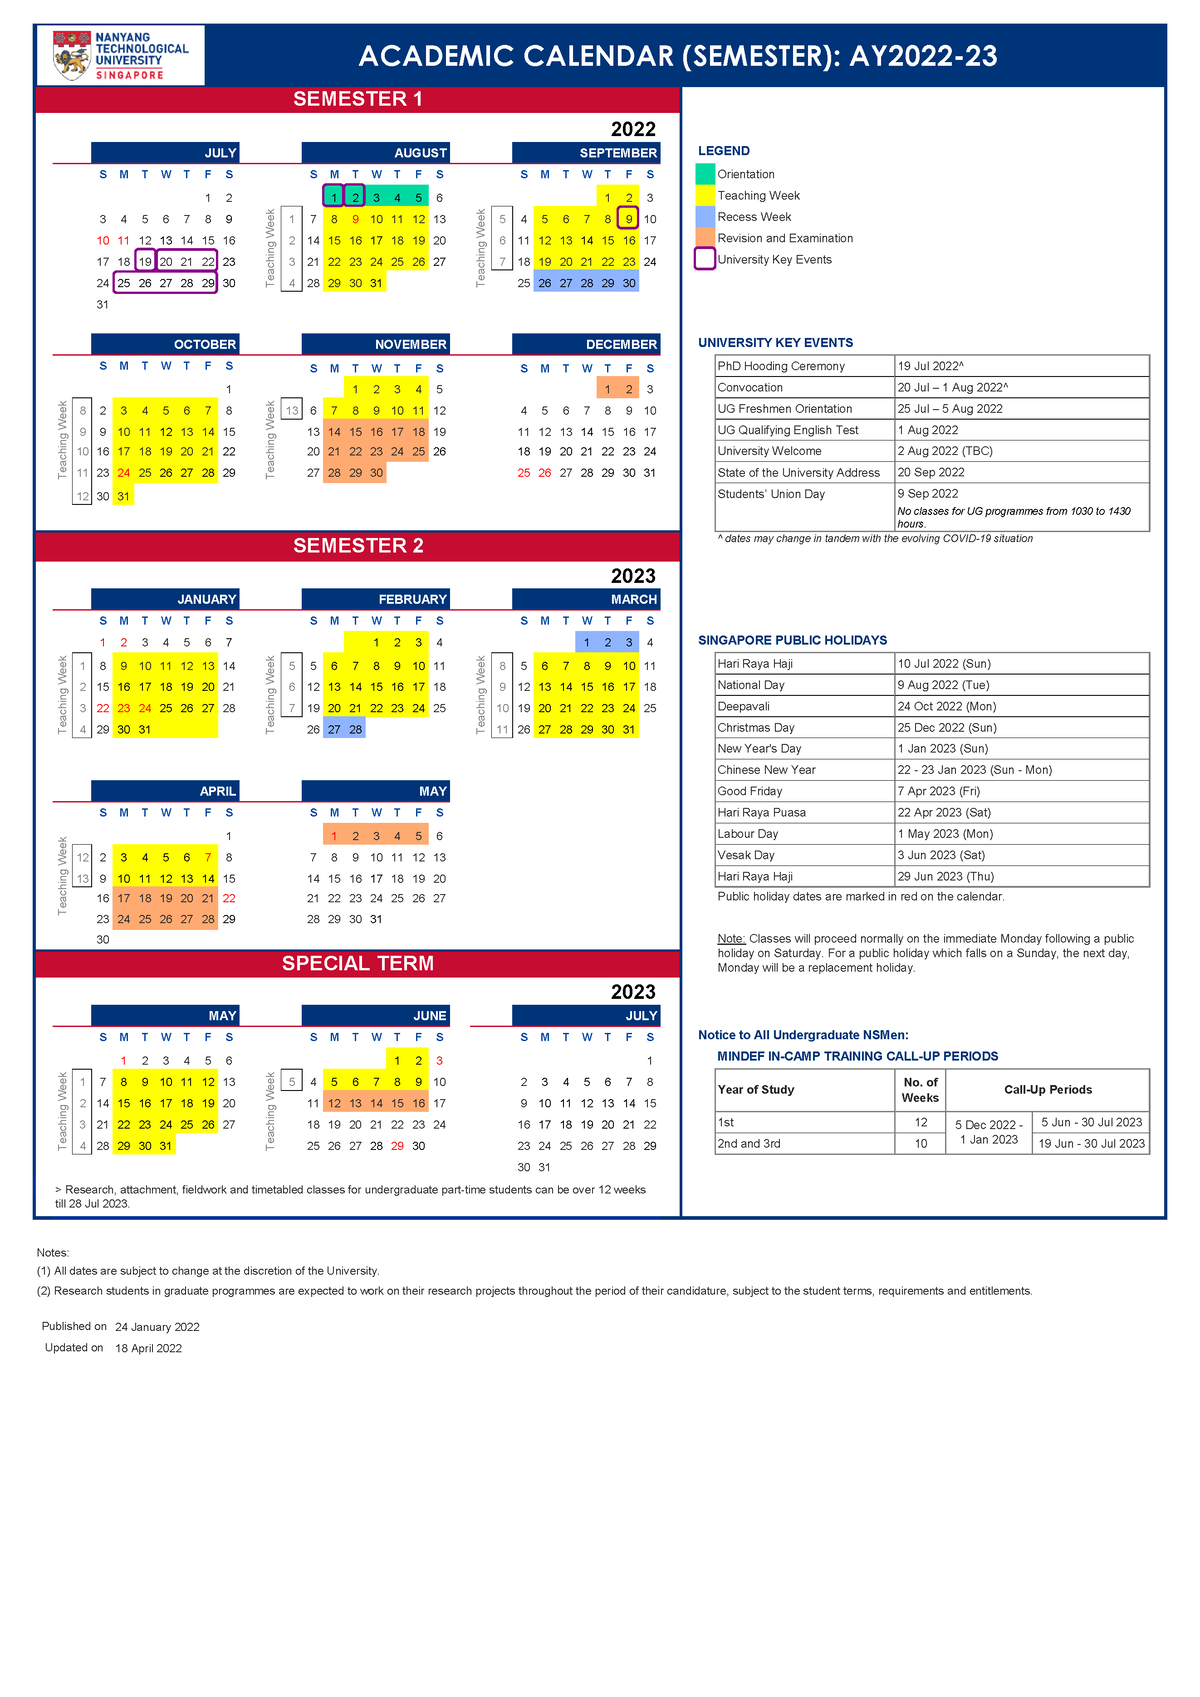 NTU Academic Calendar AY2022 23 (Semester) JULY AUGUST SEPTEMBER S M